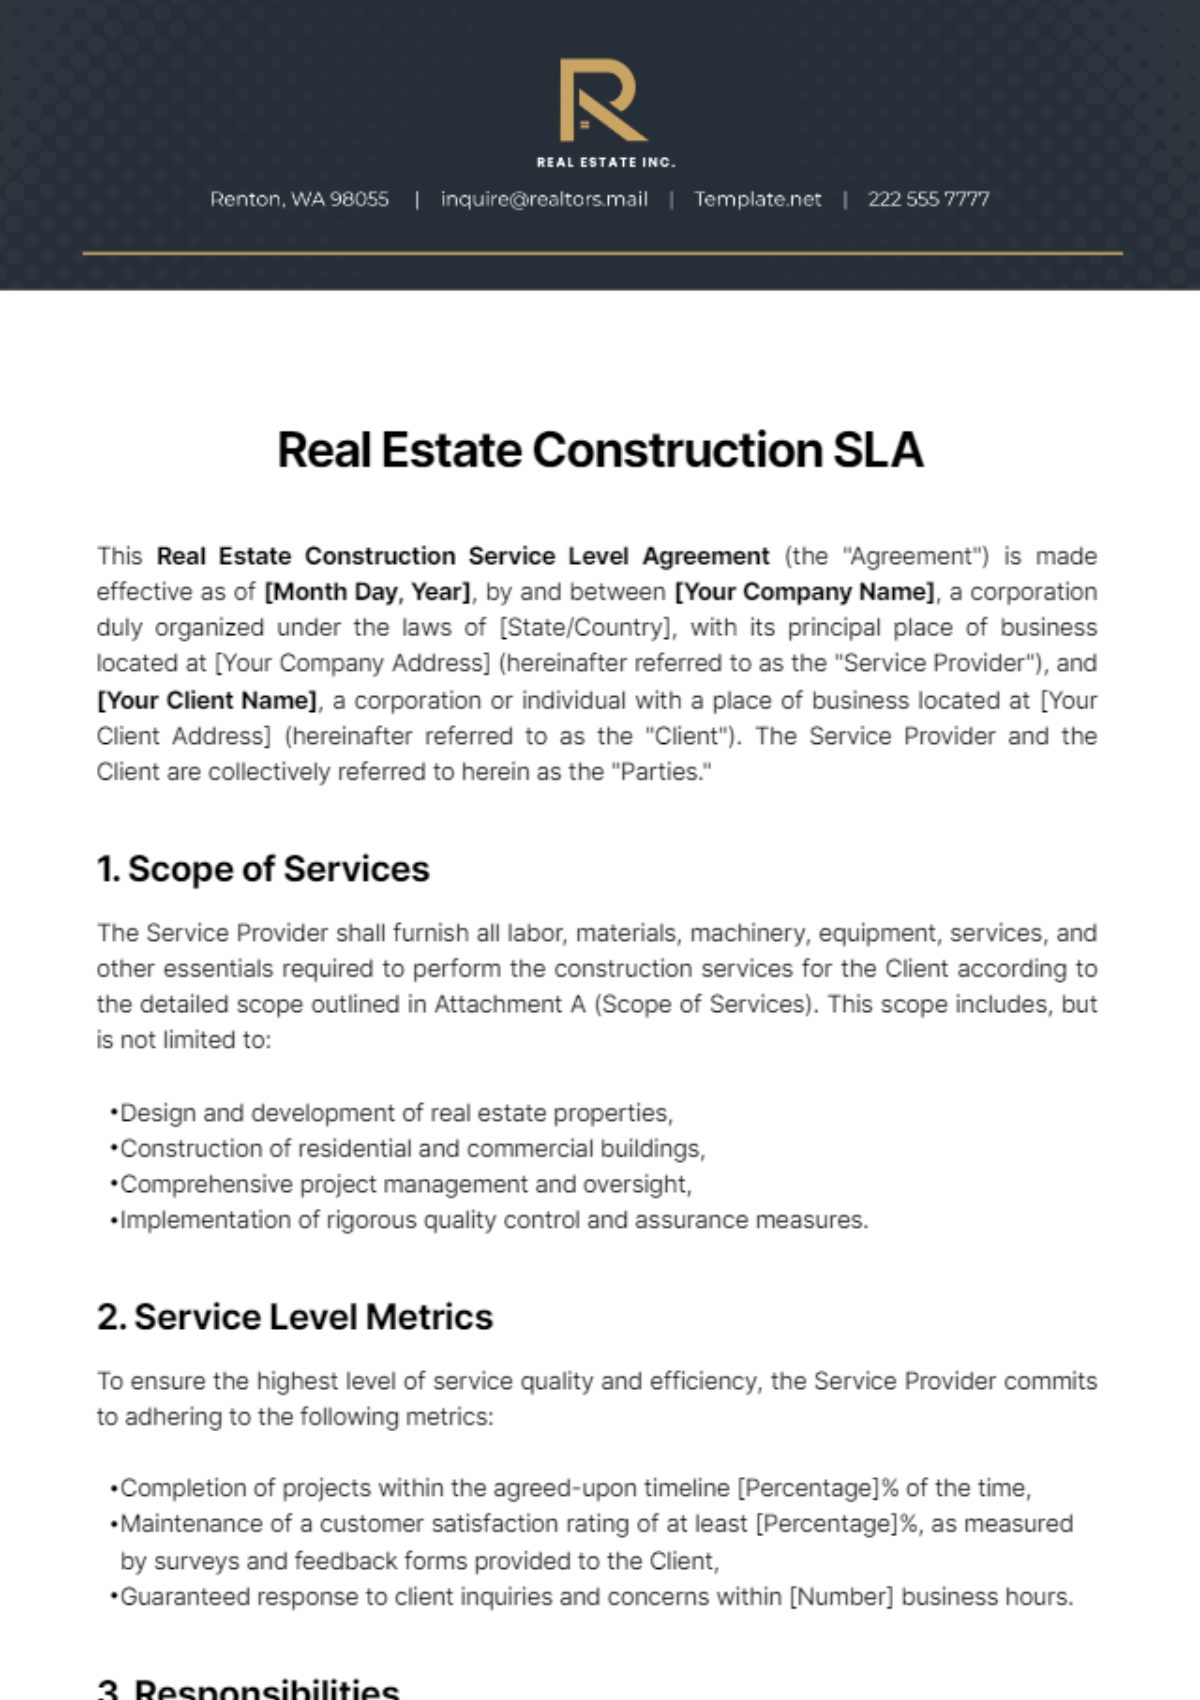 Real Estate Construction SLA Template